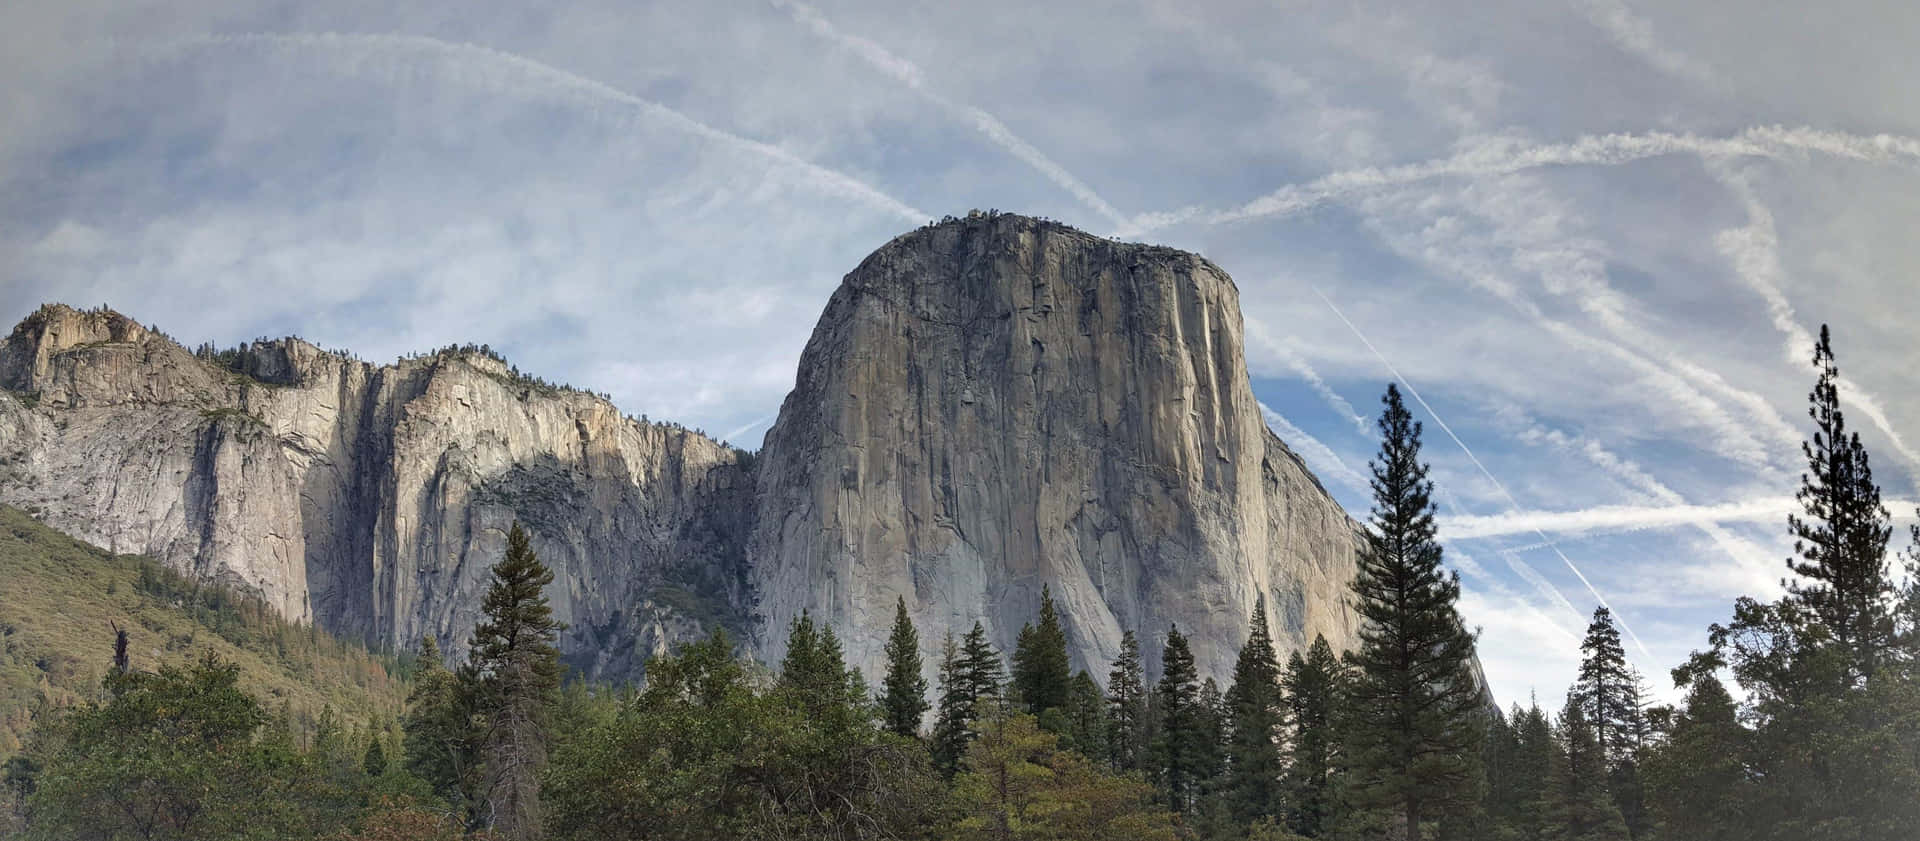 The magnificent El Capitan in Yosemite National Park Wallpaper